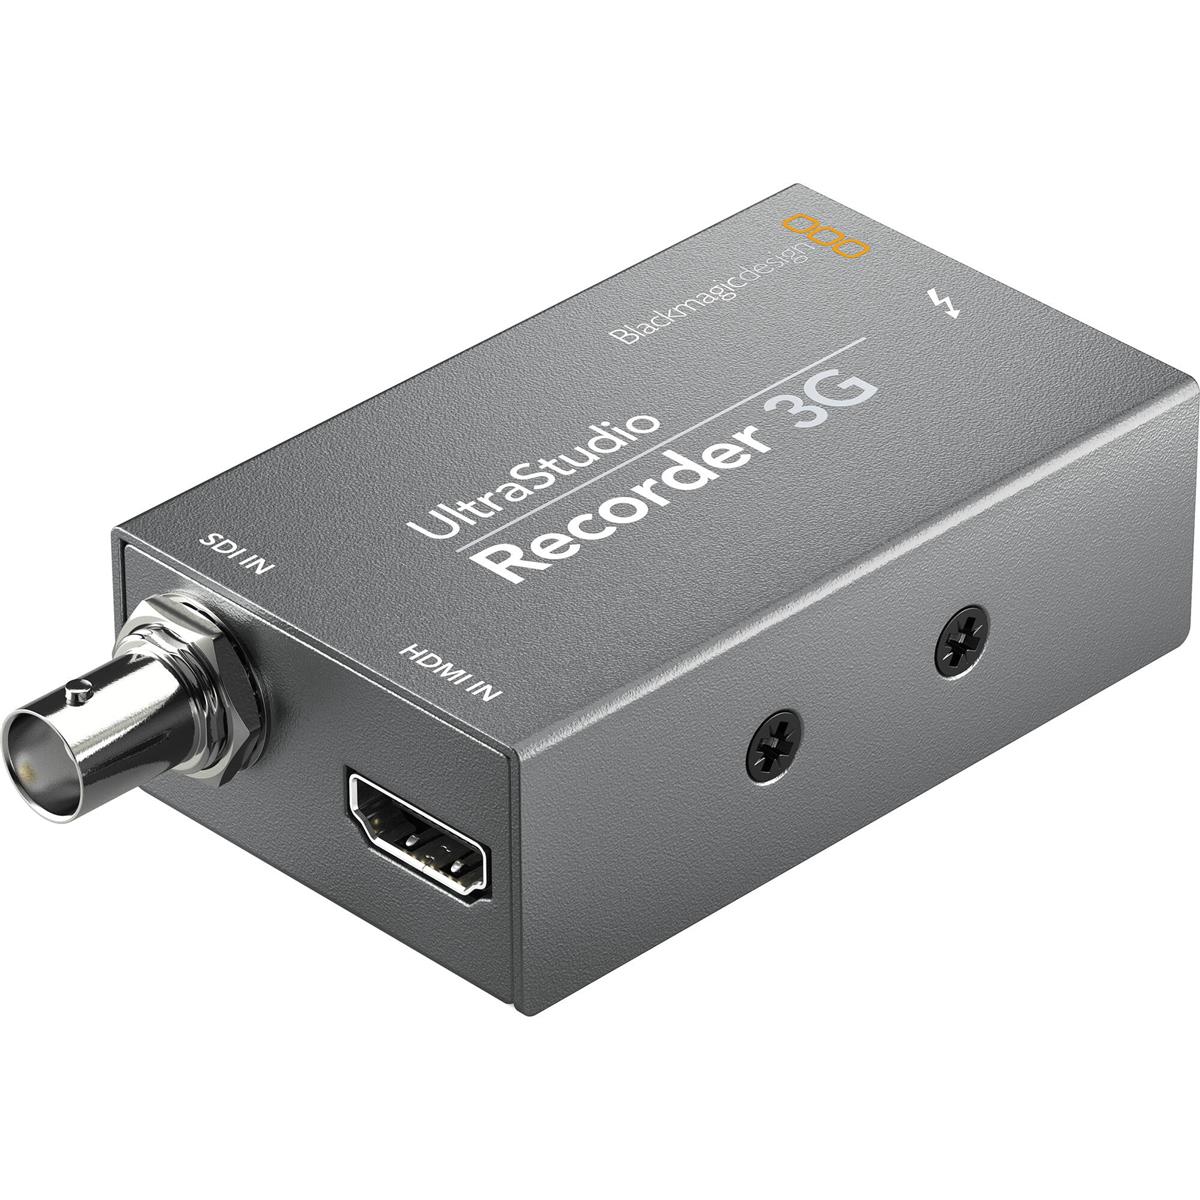 

Blackmagic Design UltraStudio Recorder 3G with Thunderbolt 3